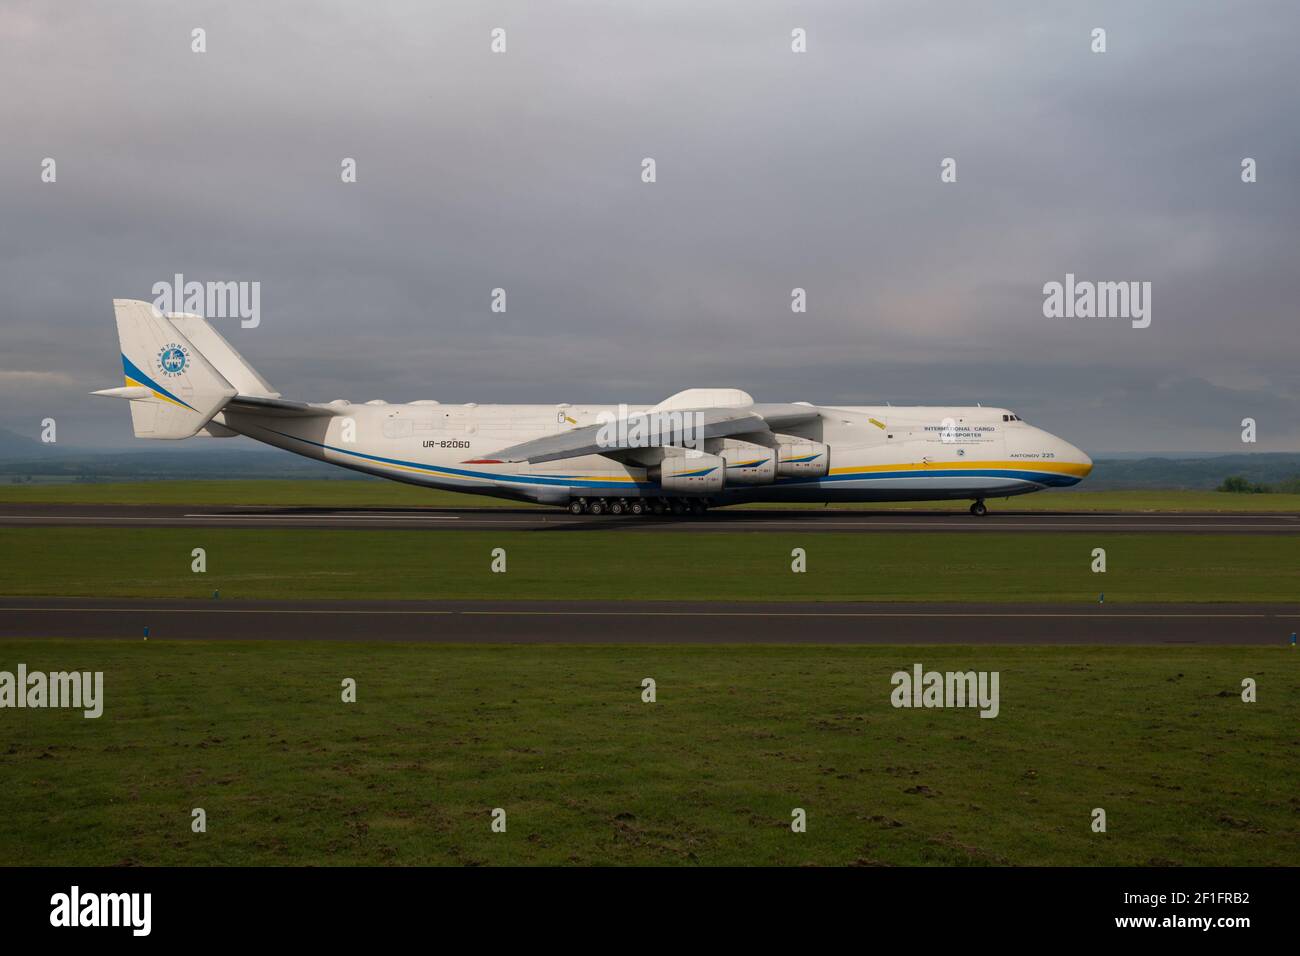 Antonov An-225 Mriya, the largest transport aircraft in the world. Stock Photo